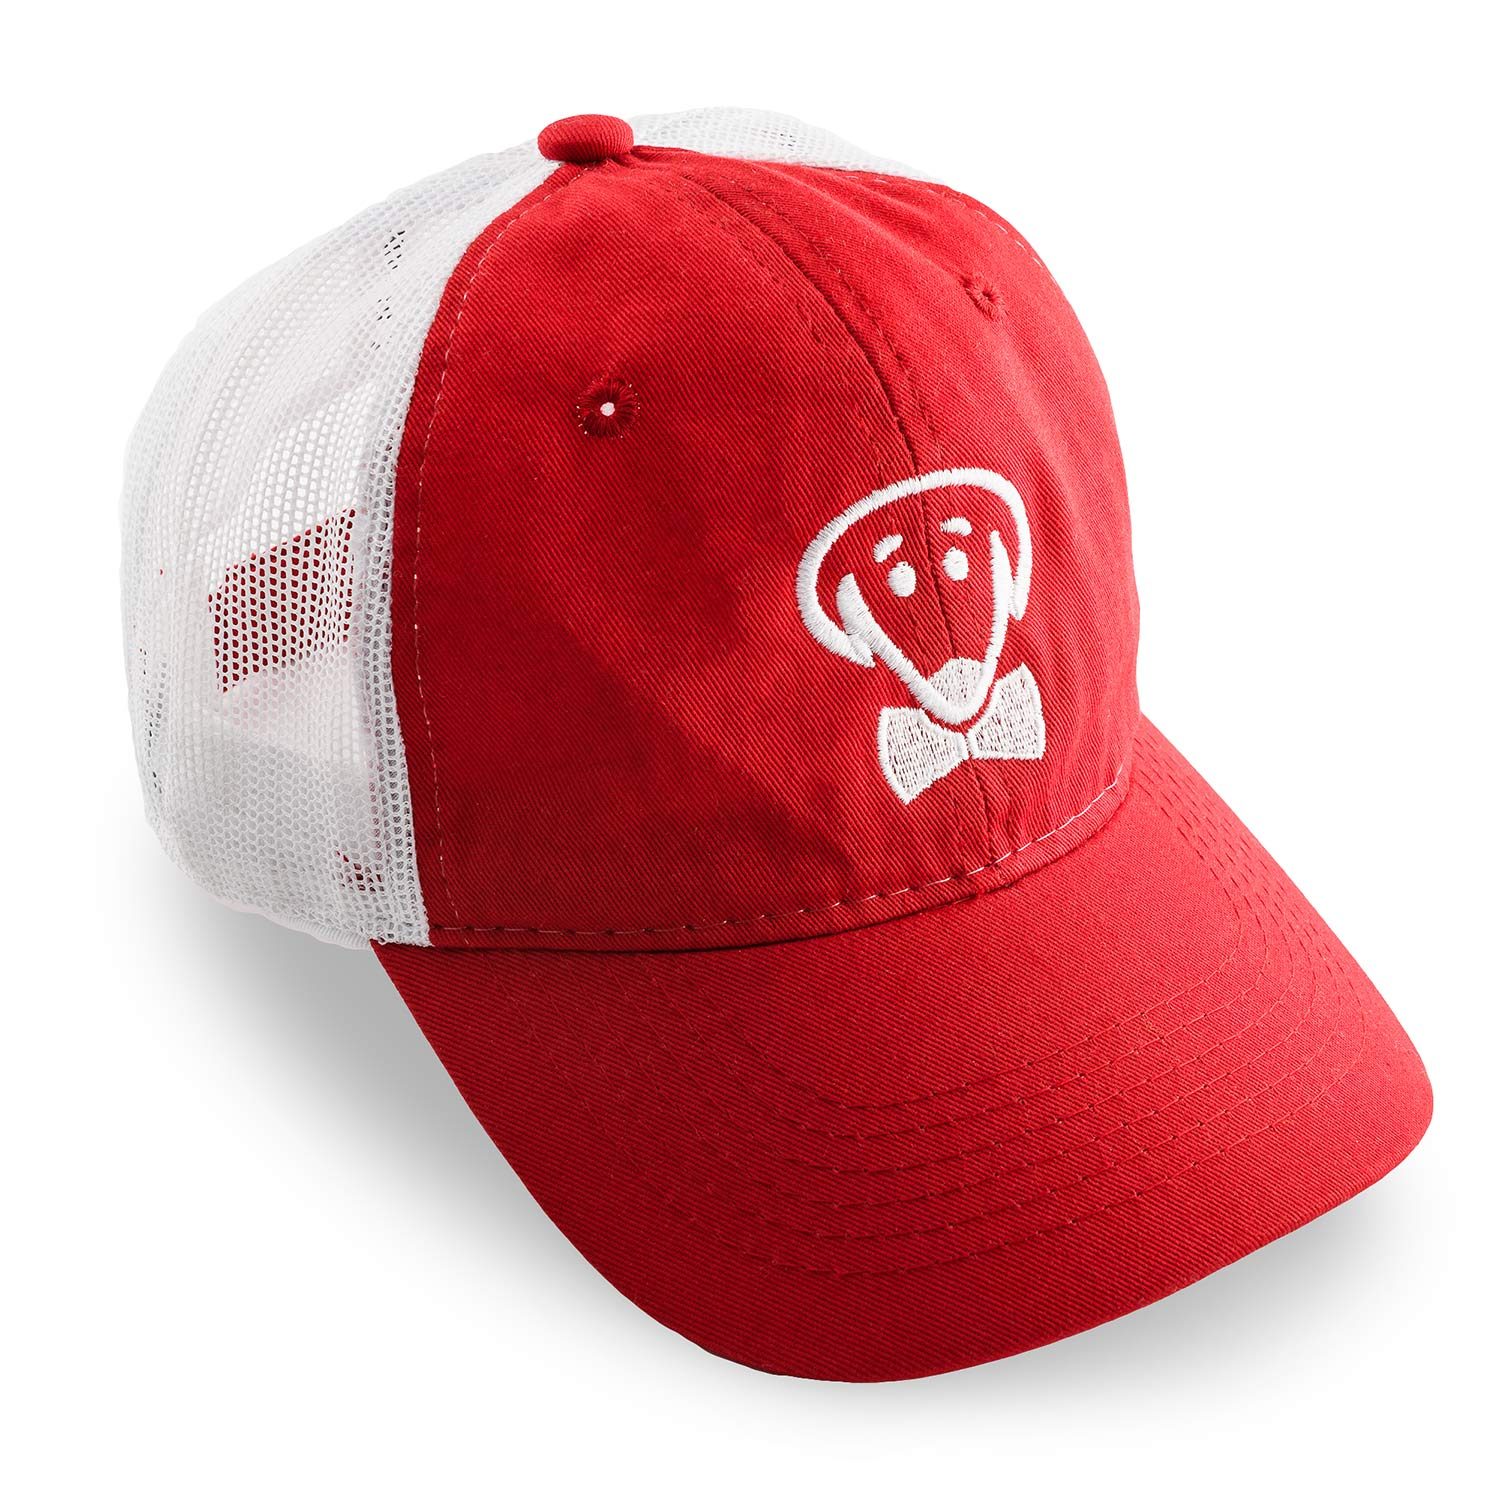 Brett baseball hat in royal red and white mesh by Beau Tyler